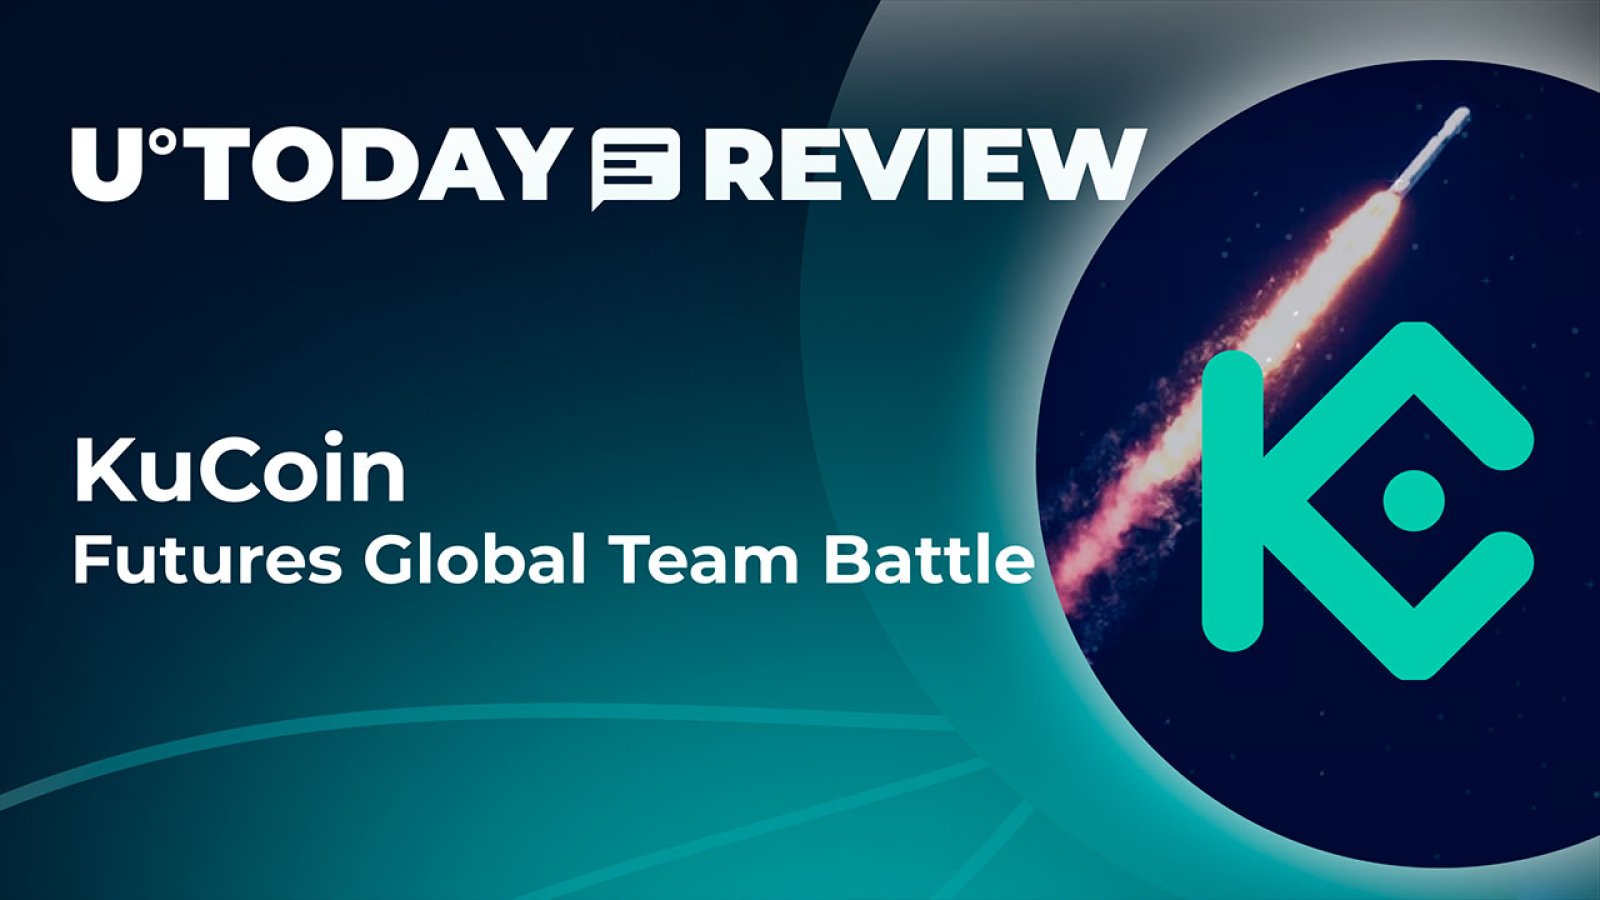 KuCoin User Count Surpasses 20 Million, Futures Global Team Battle Kicks Off